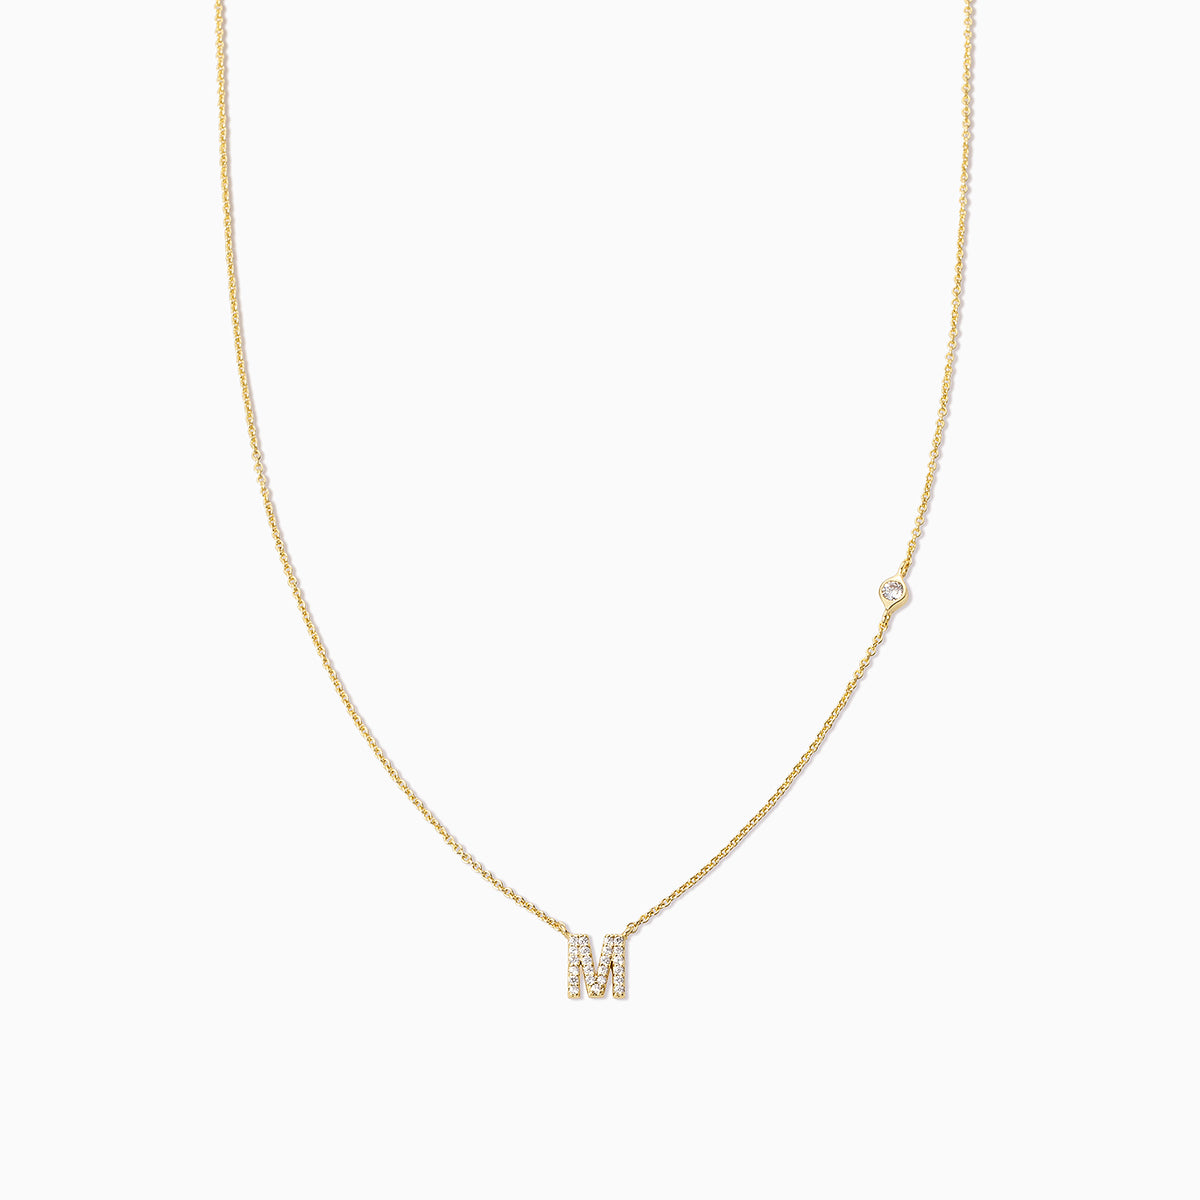 Pavé Initial Necklace | Gold M | Product Image | Uncommon James